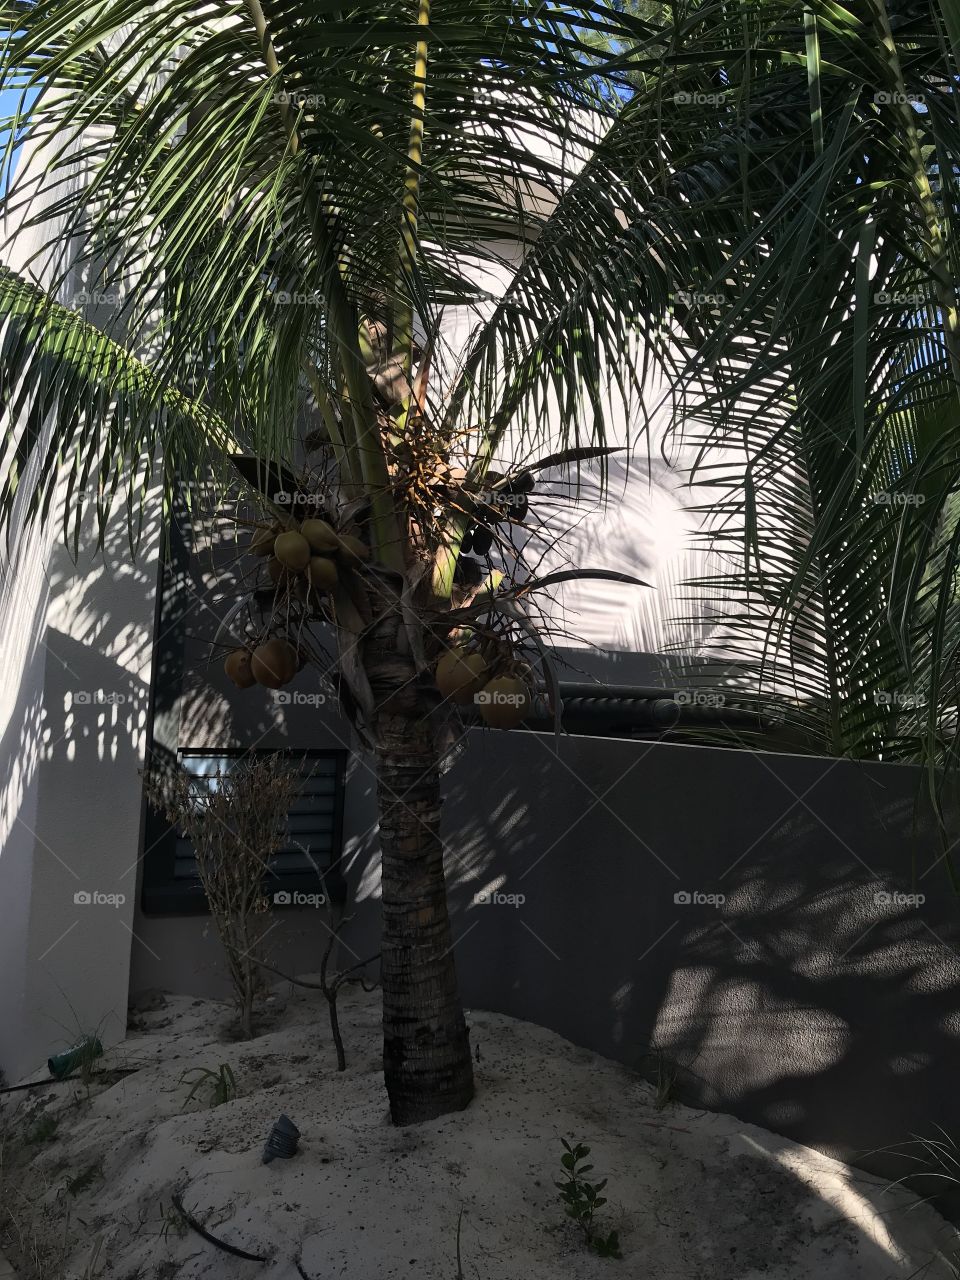 Coconut Palm tree@ Mauritius 